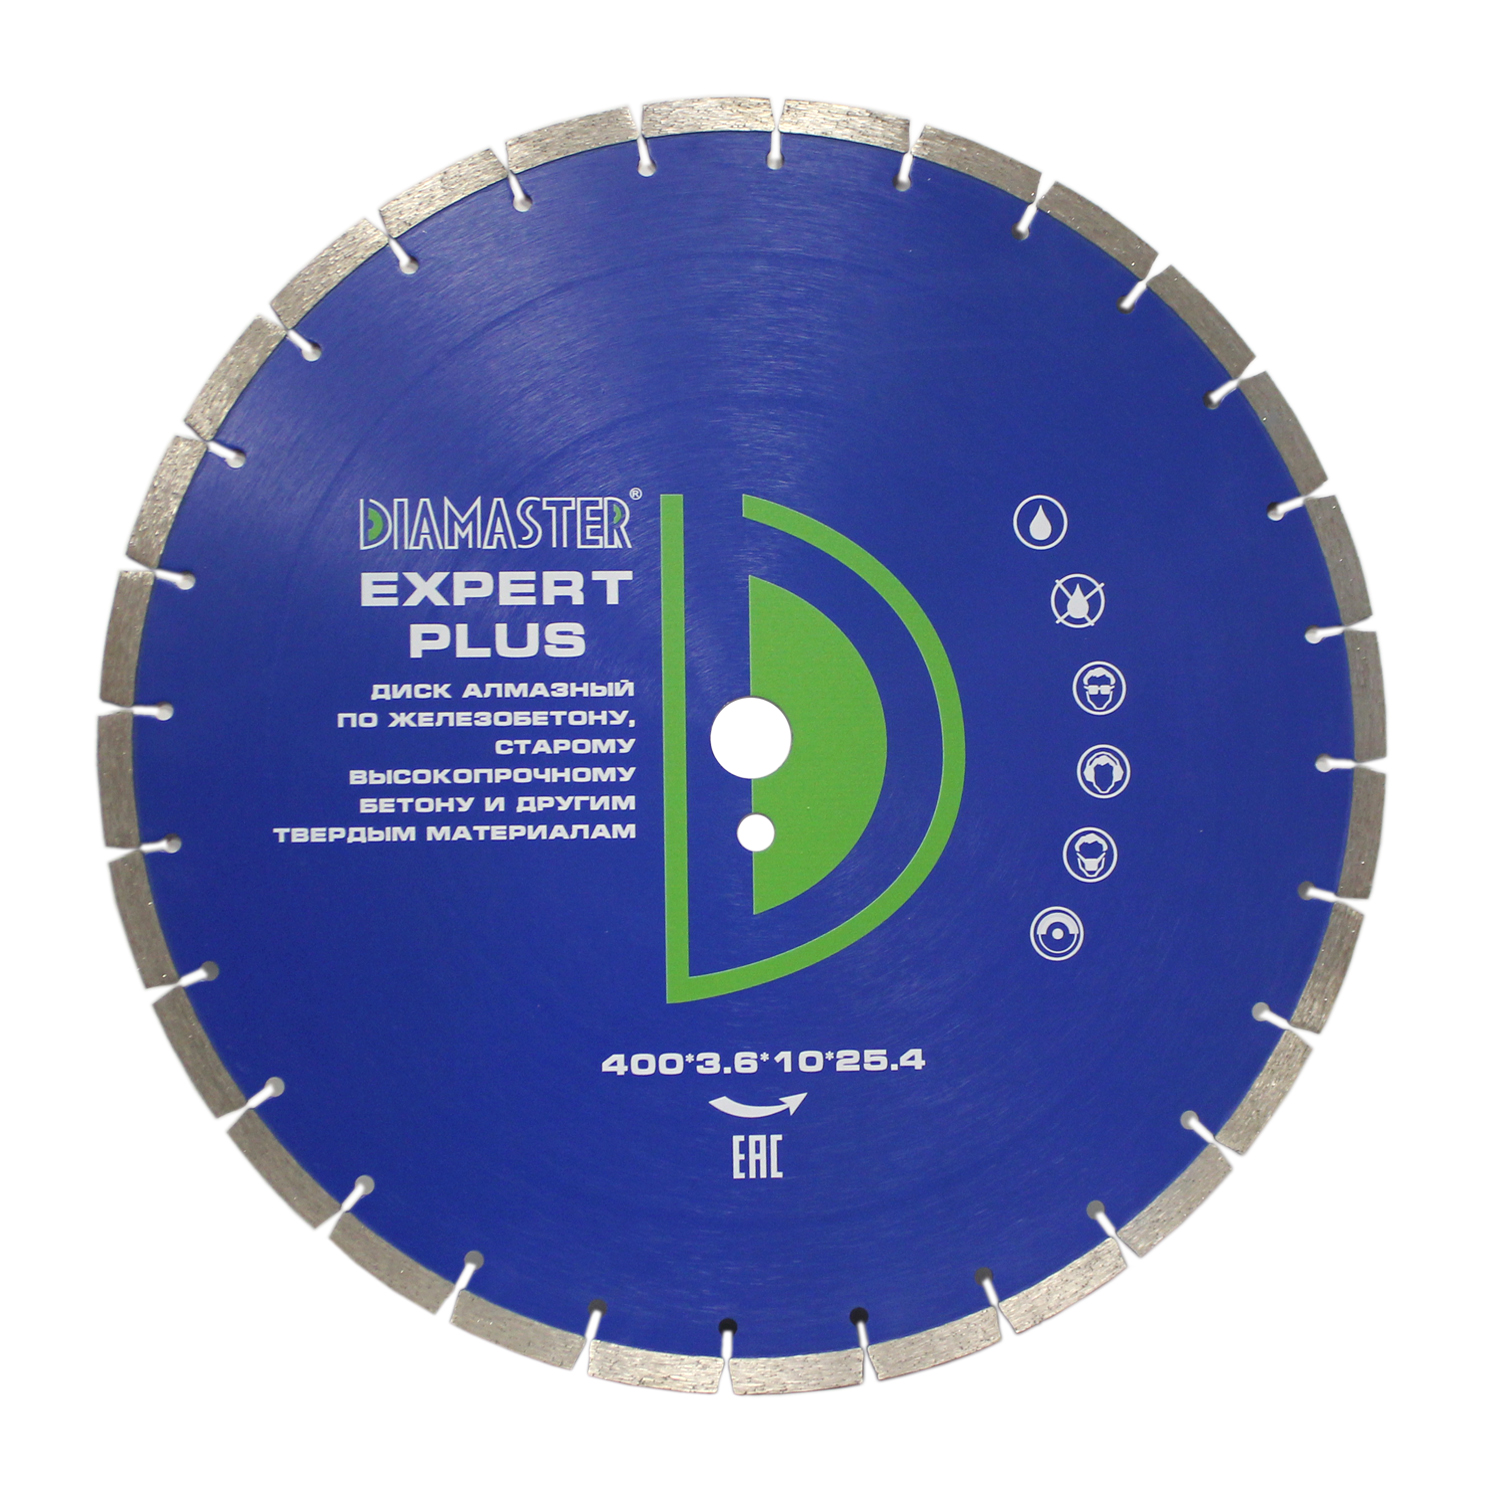 Диск сегментный Expert plus д.400*25,4 (*3,6*10)мм | 28z/железобетон/wet DIAMASTER диск сегментный laser ultra д 450 2 8 25 4 40 4 0 10 16 мм 28 24 4 z асфальт wet dry diamaster